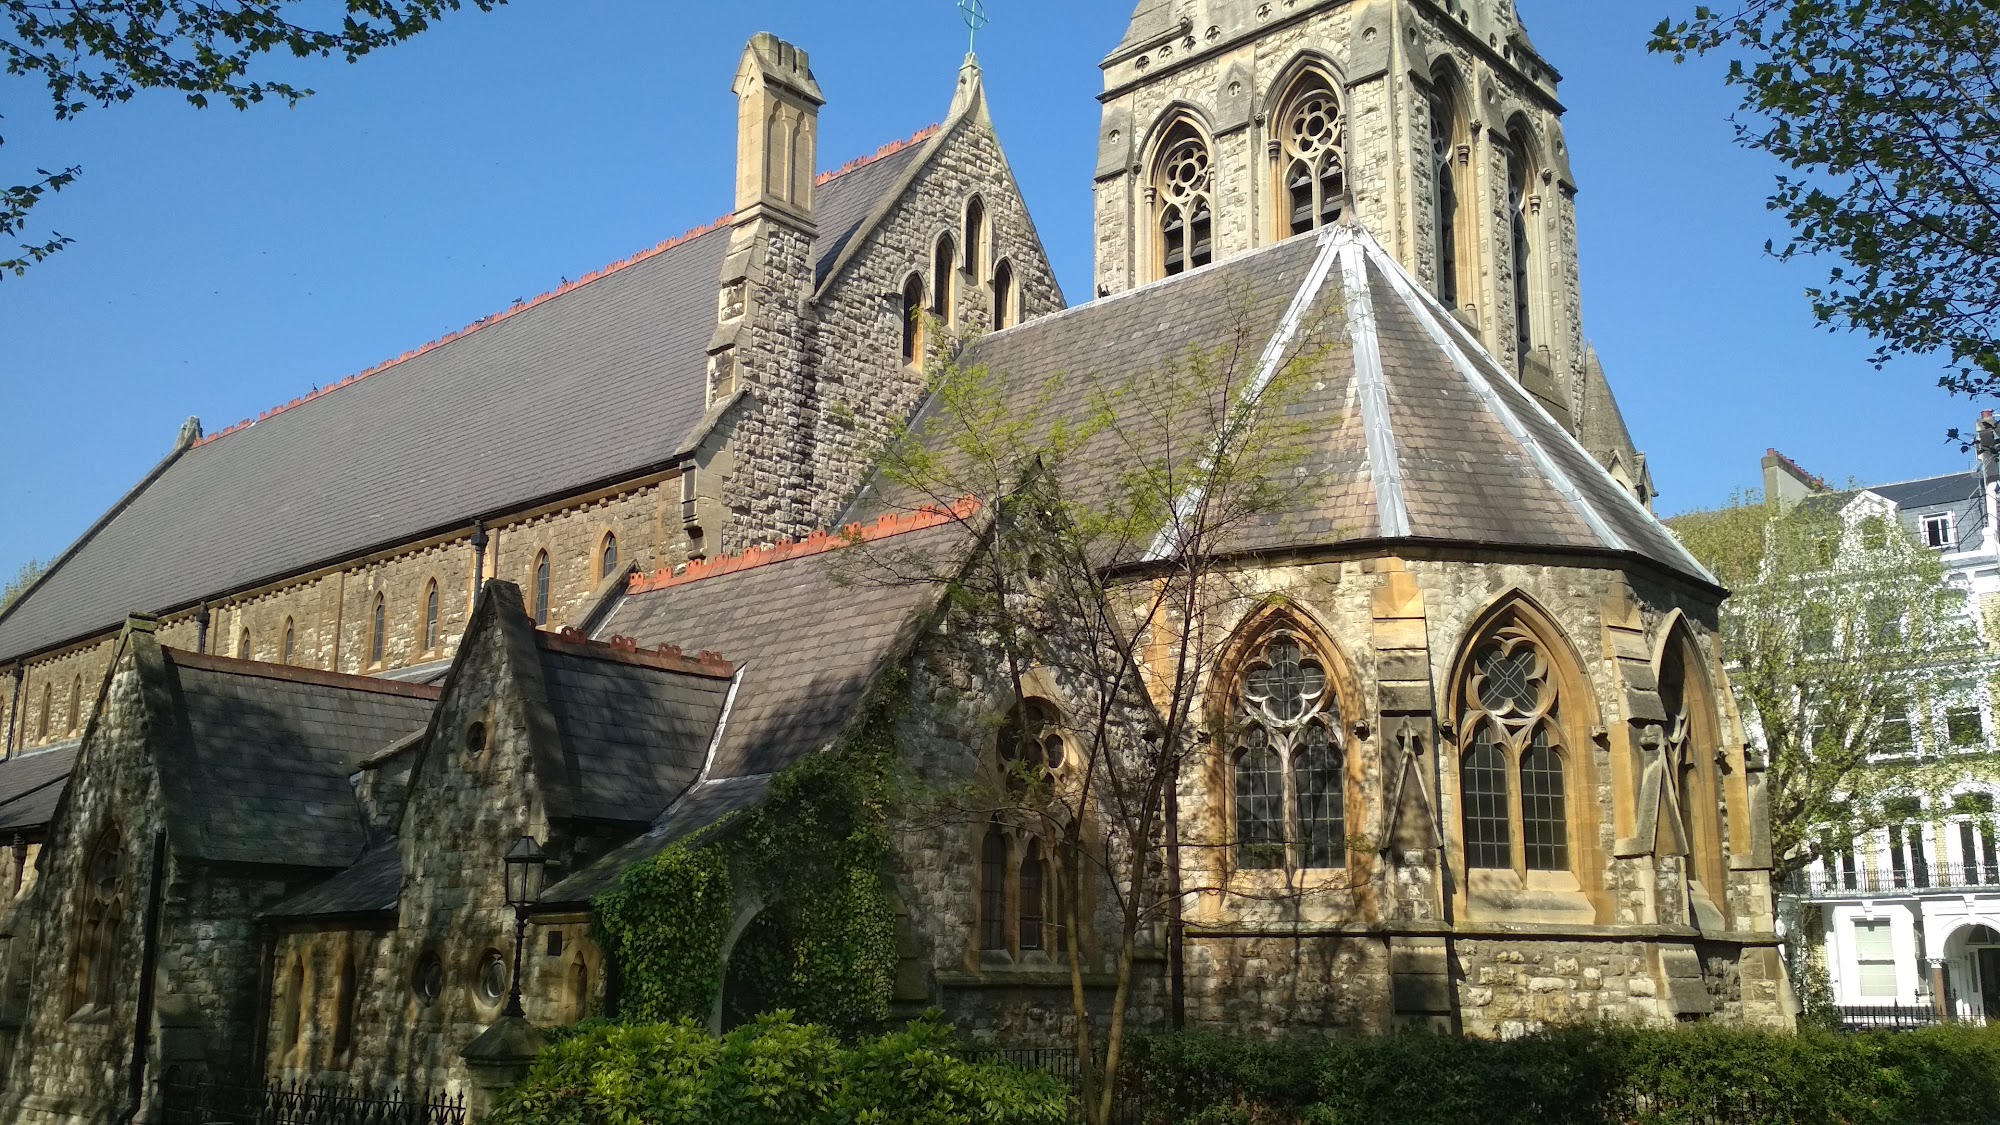 Saint Luke's Church of England